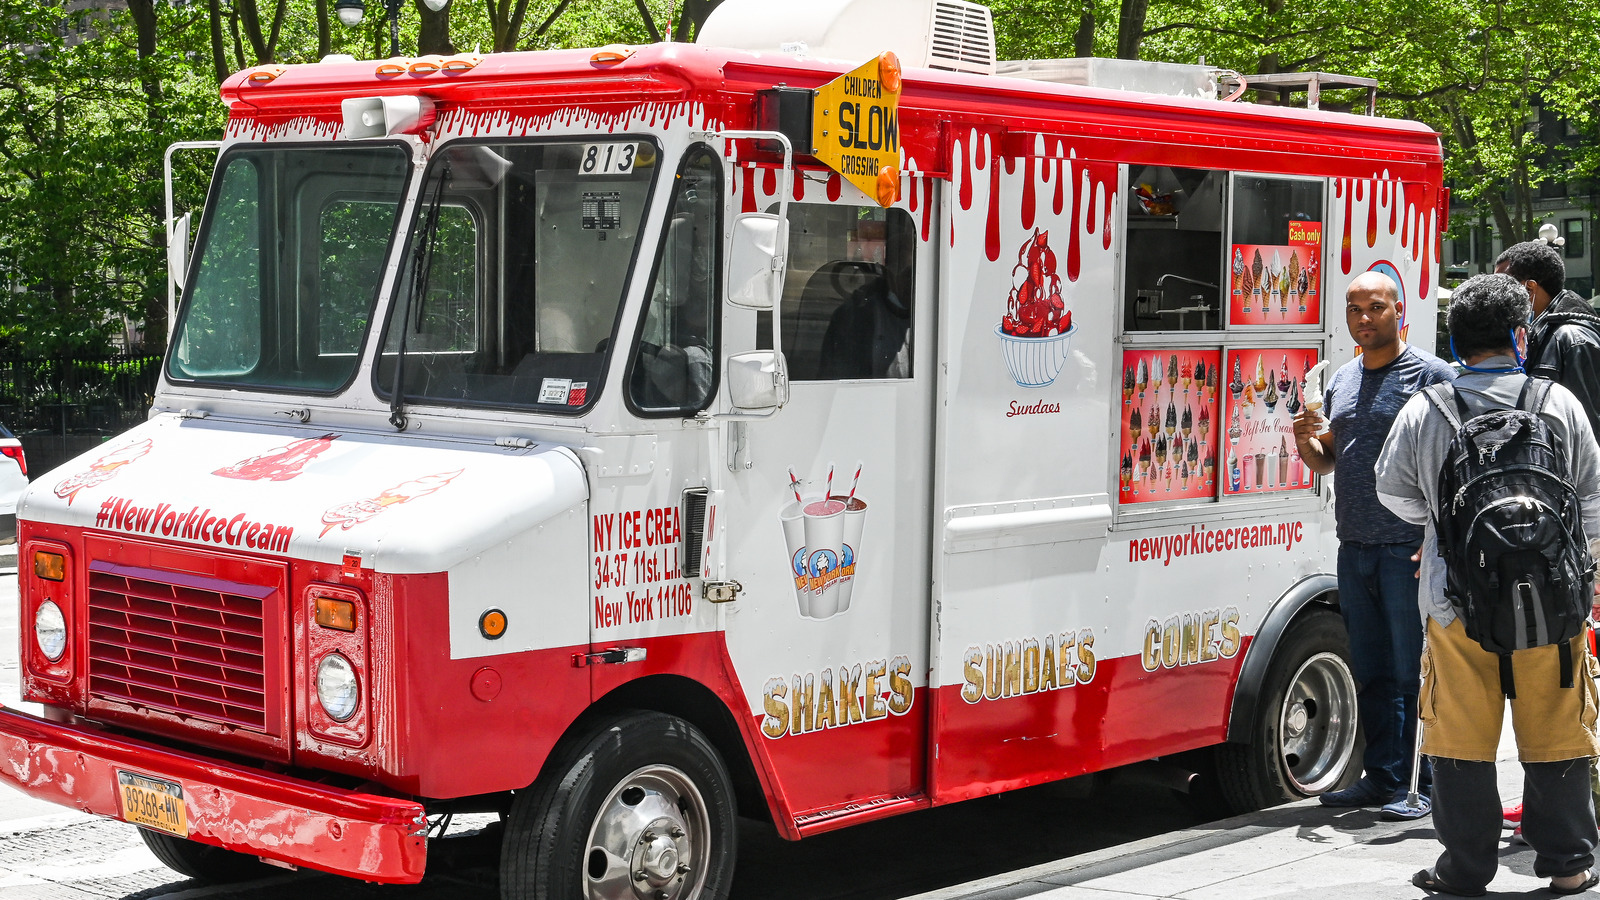 ice cream trucks for sale near me